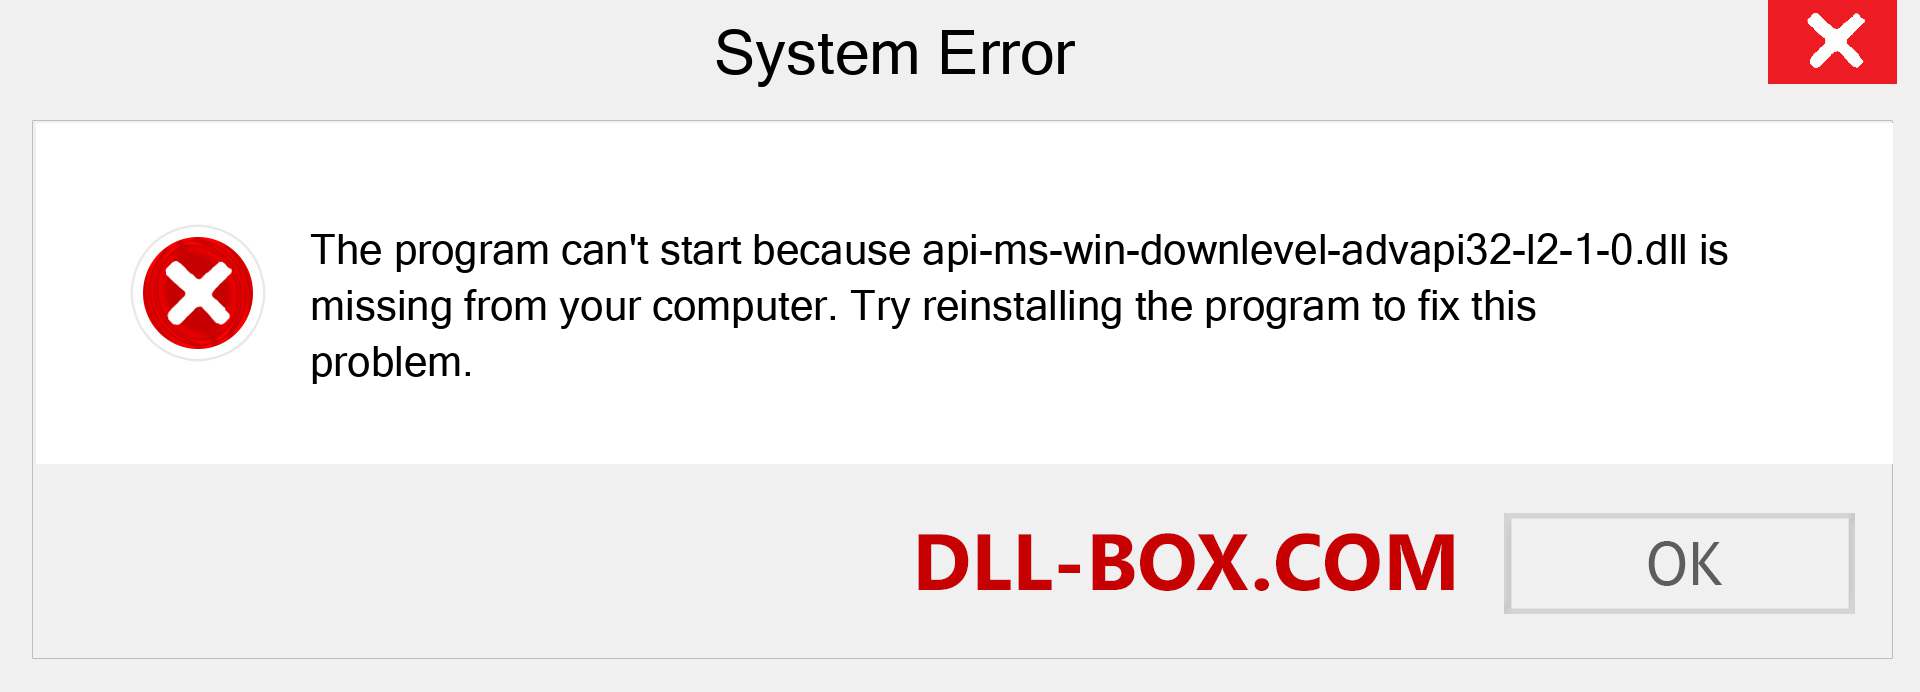  api-ms-win-downlevel-advapi32-l2-1-0.dll file is missing?. Download for Windows 7, 8, 10 - Fix  api-ms-win-downlevel-advapi32-l2-1-0 dll Missing Error on Windows, photos, images